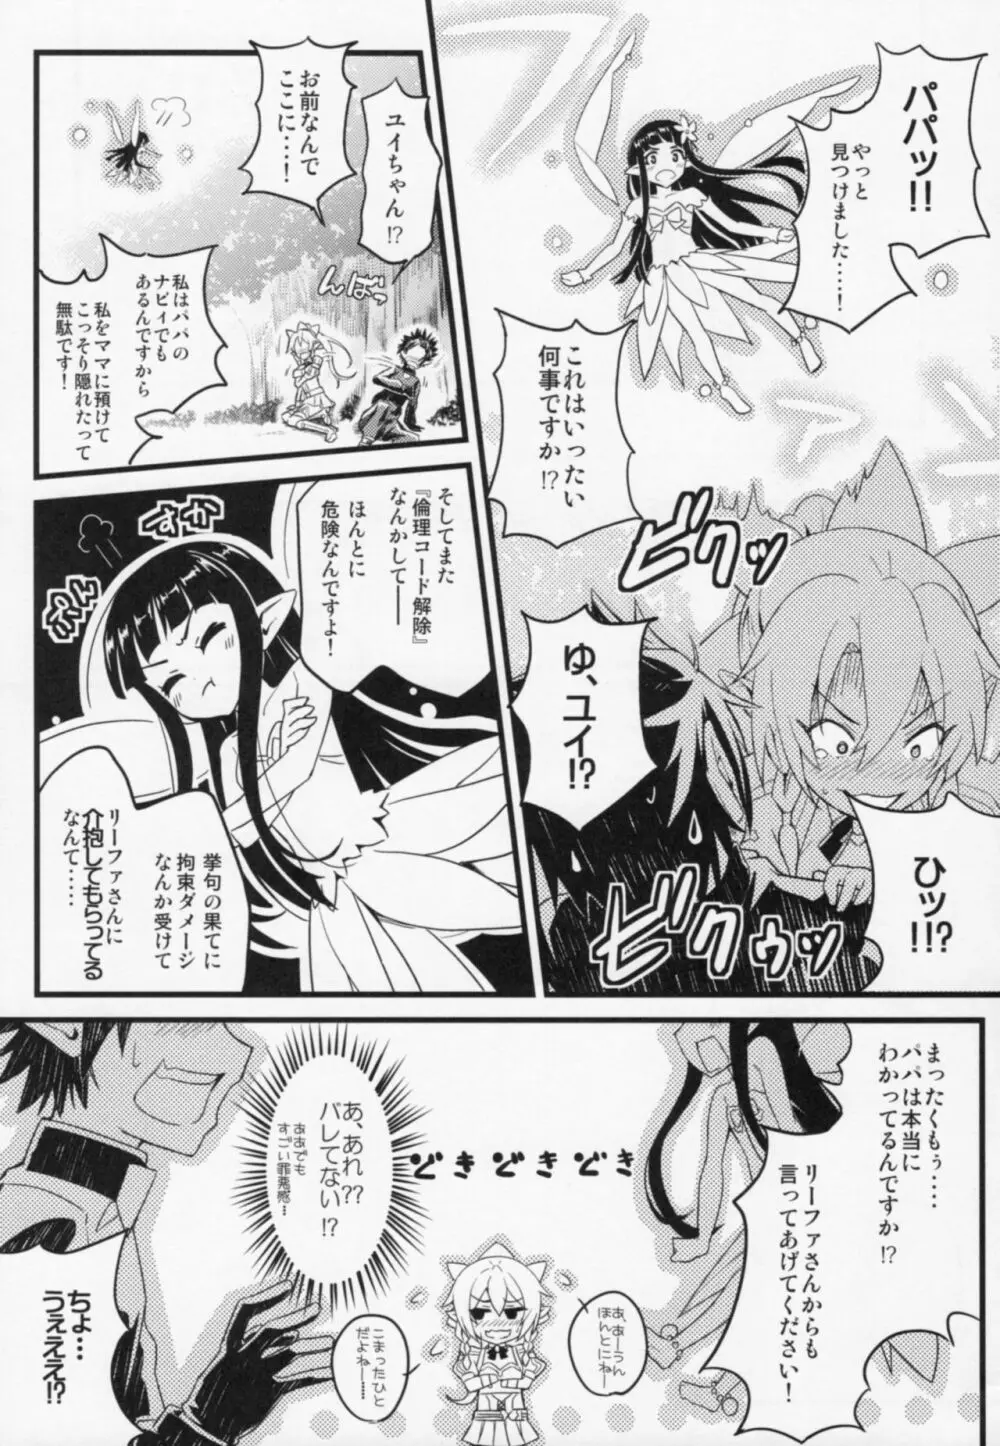 Leafa's∞Moment - page22